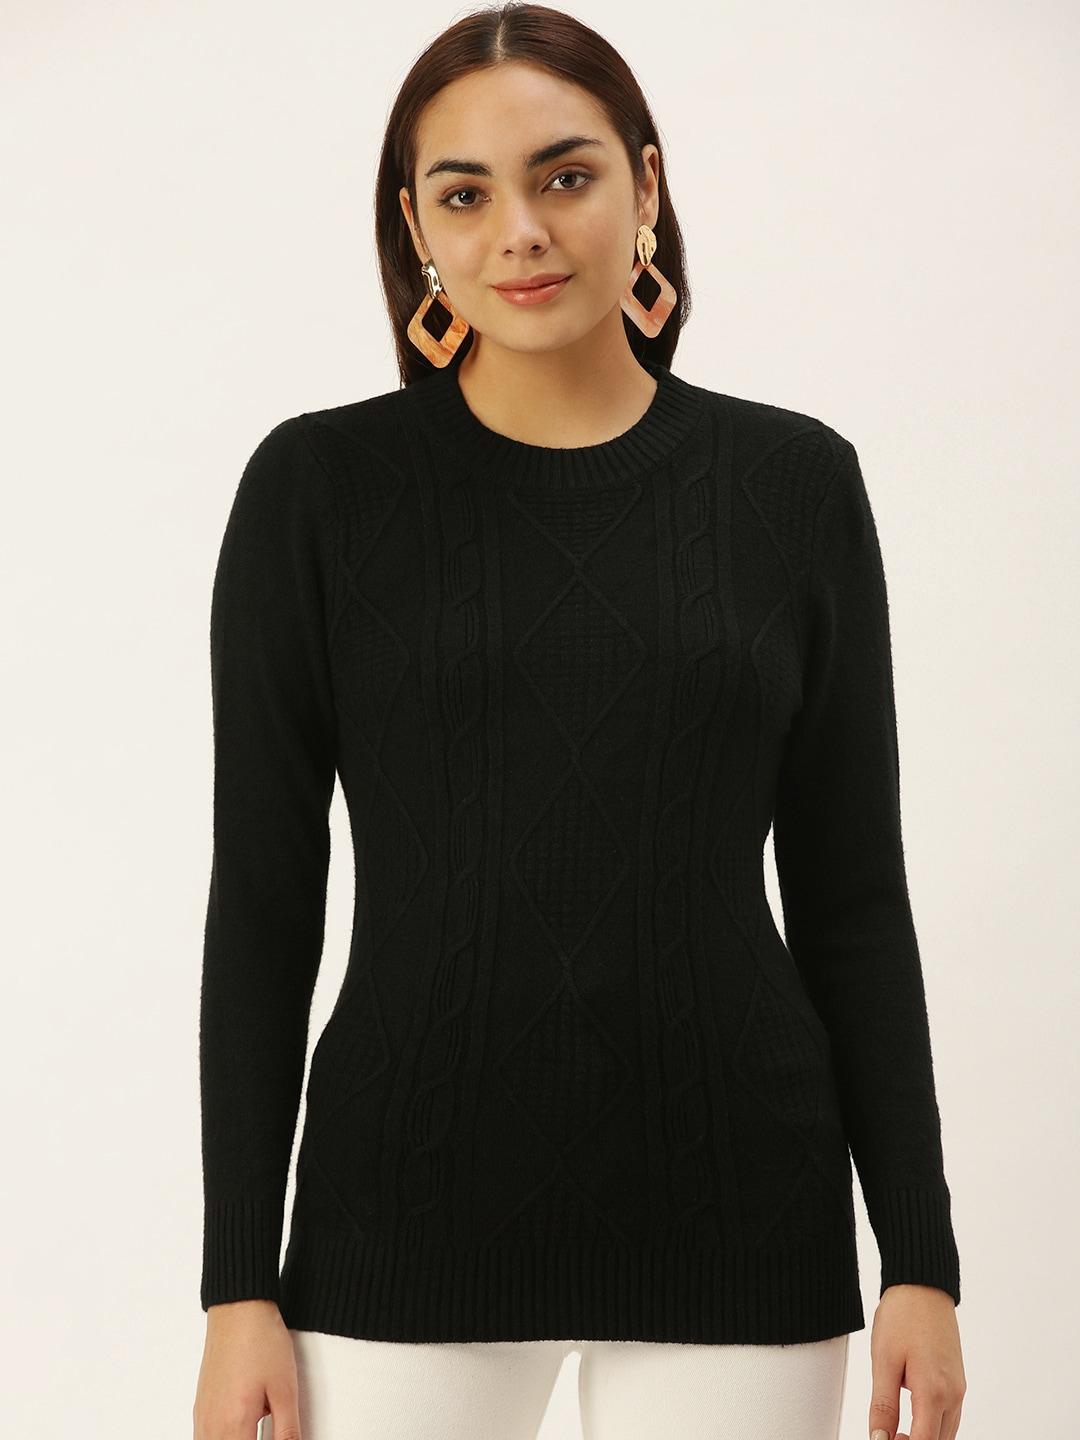 sheczzar women black cable knit pullover